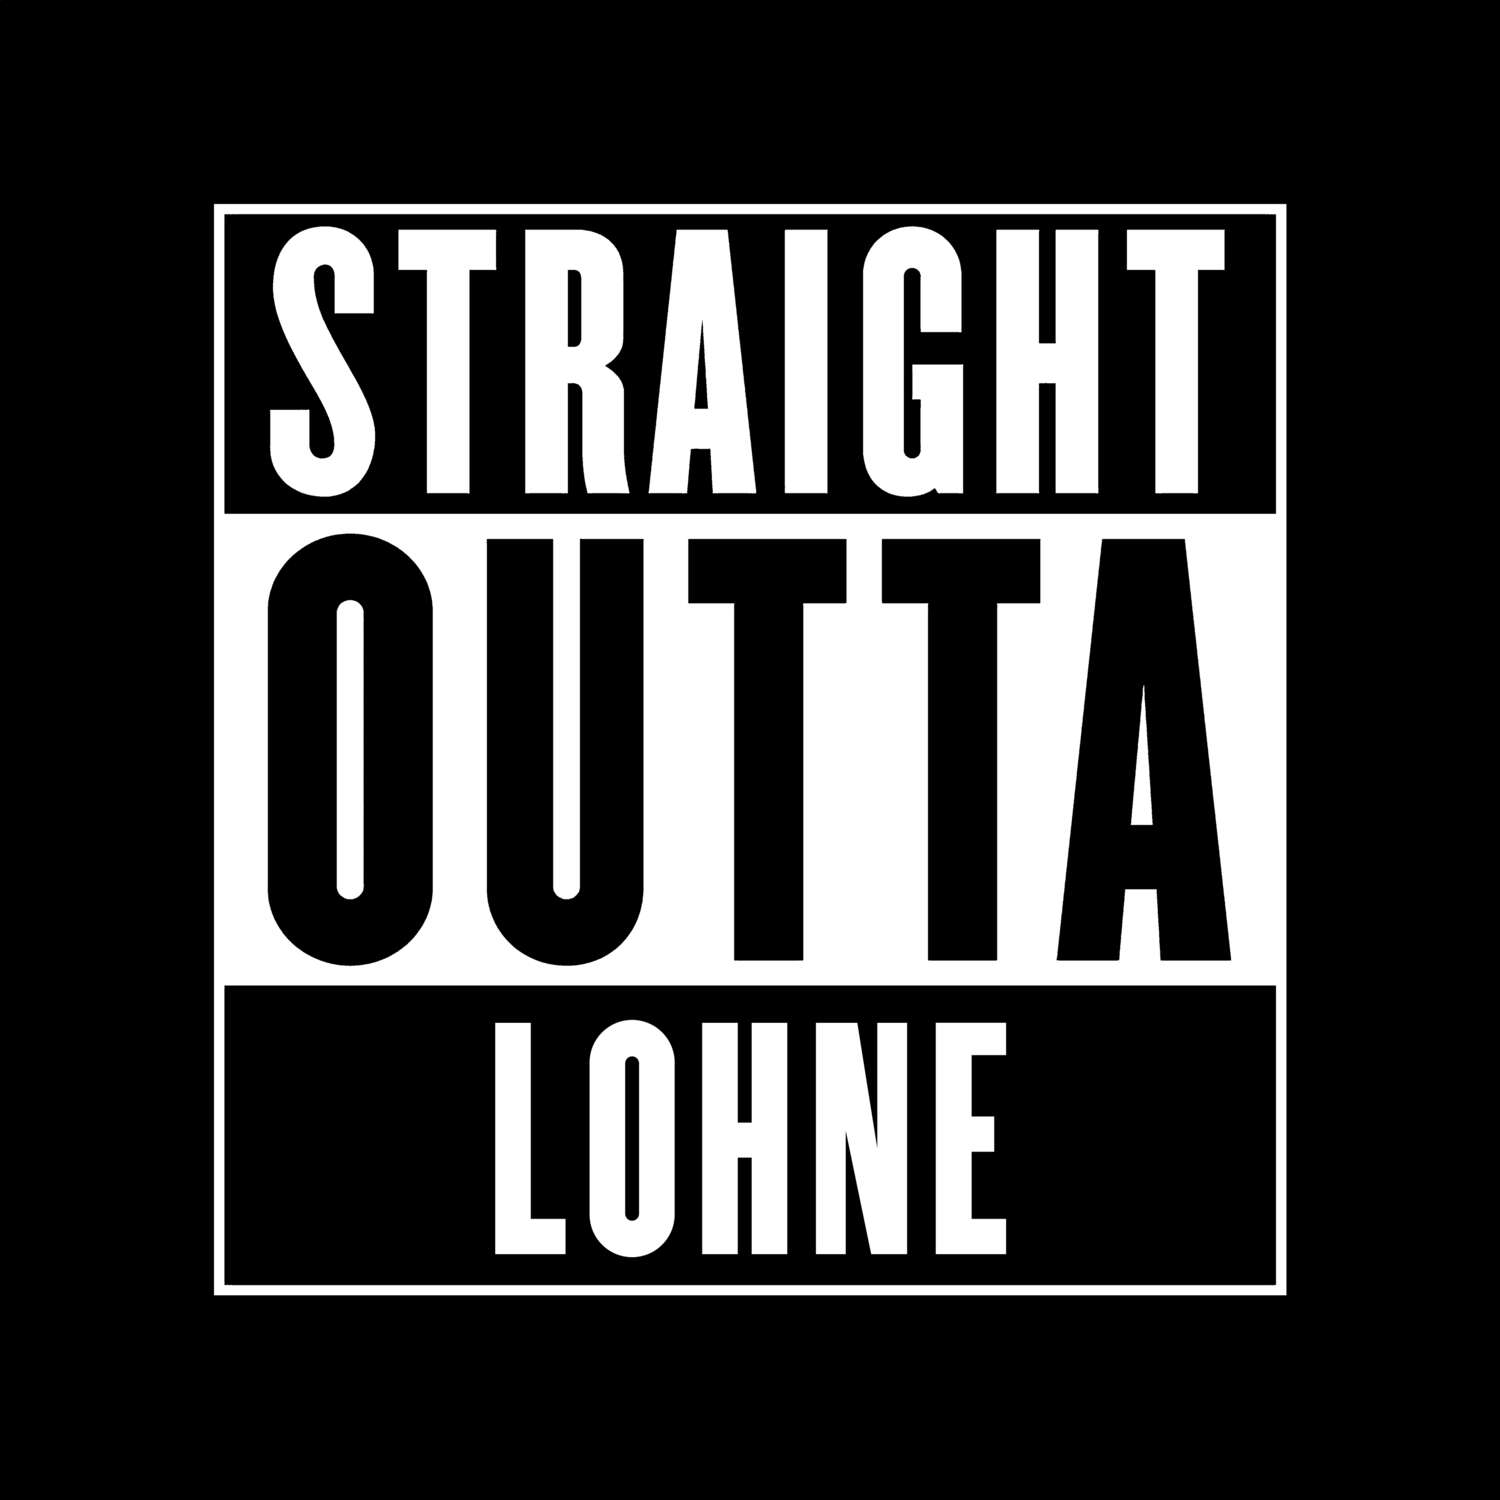 Lohne T-Shirt »Straight Outta«